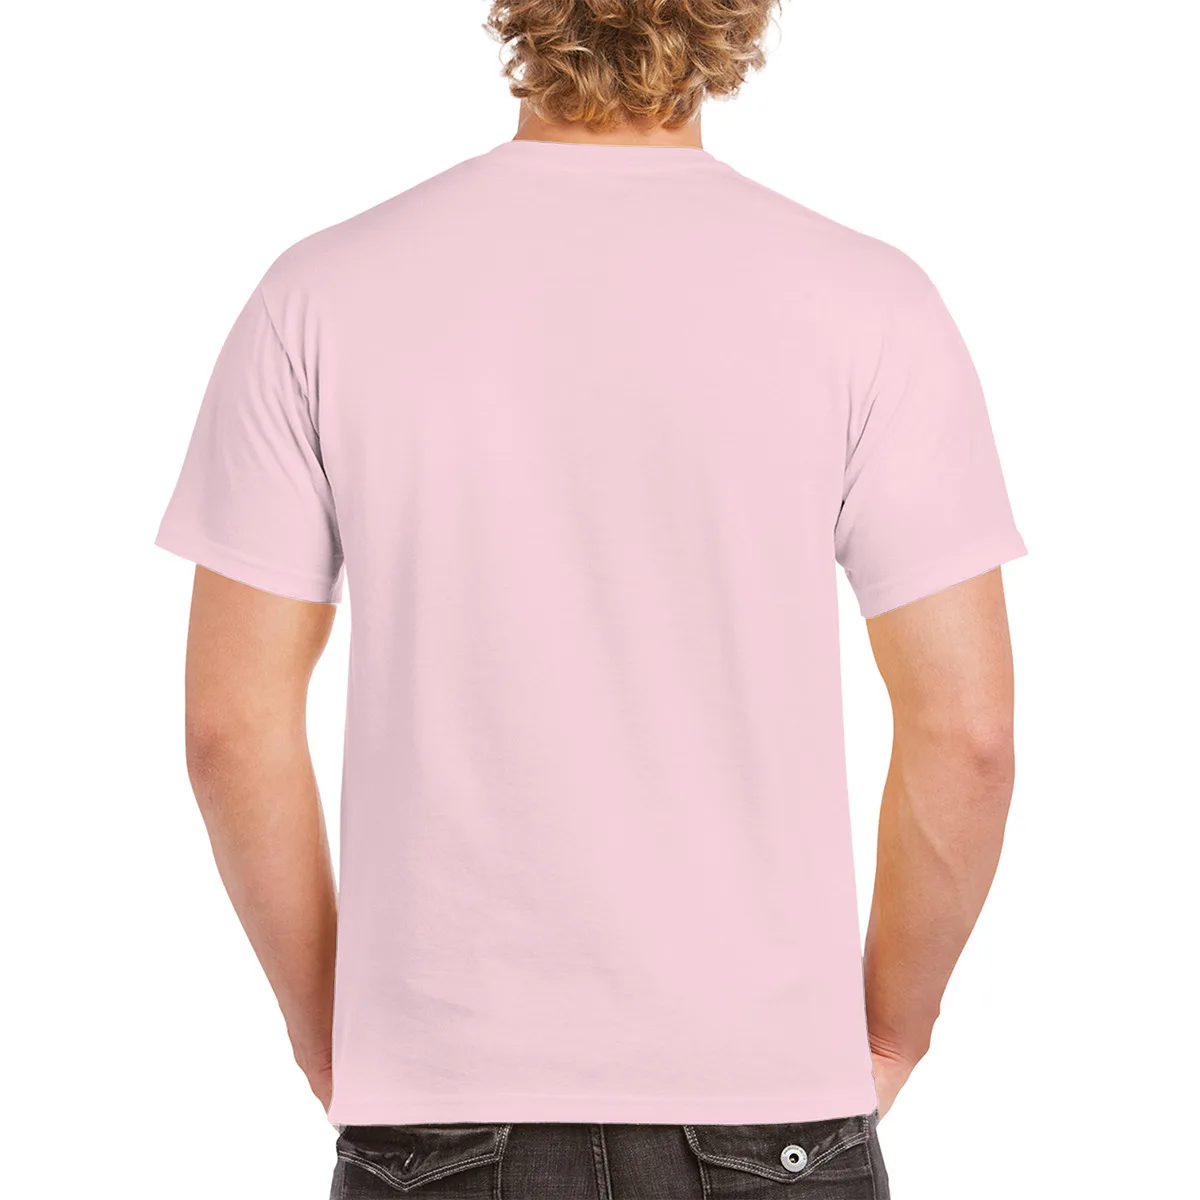 

Pink Machine Gun Kelly t shirt Unisex Harajuku Funny Street Fashion MGK Tops Hip Hop graphics 100% Cotton T-shirt Female/Man